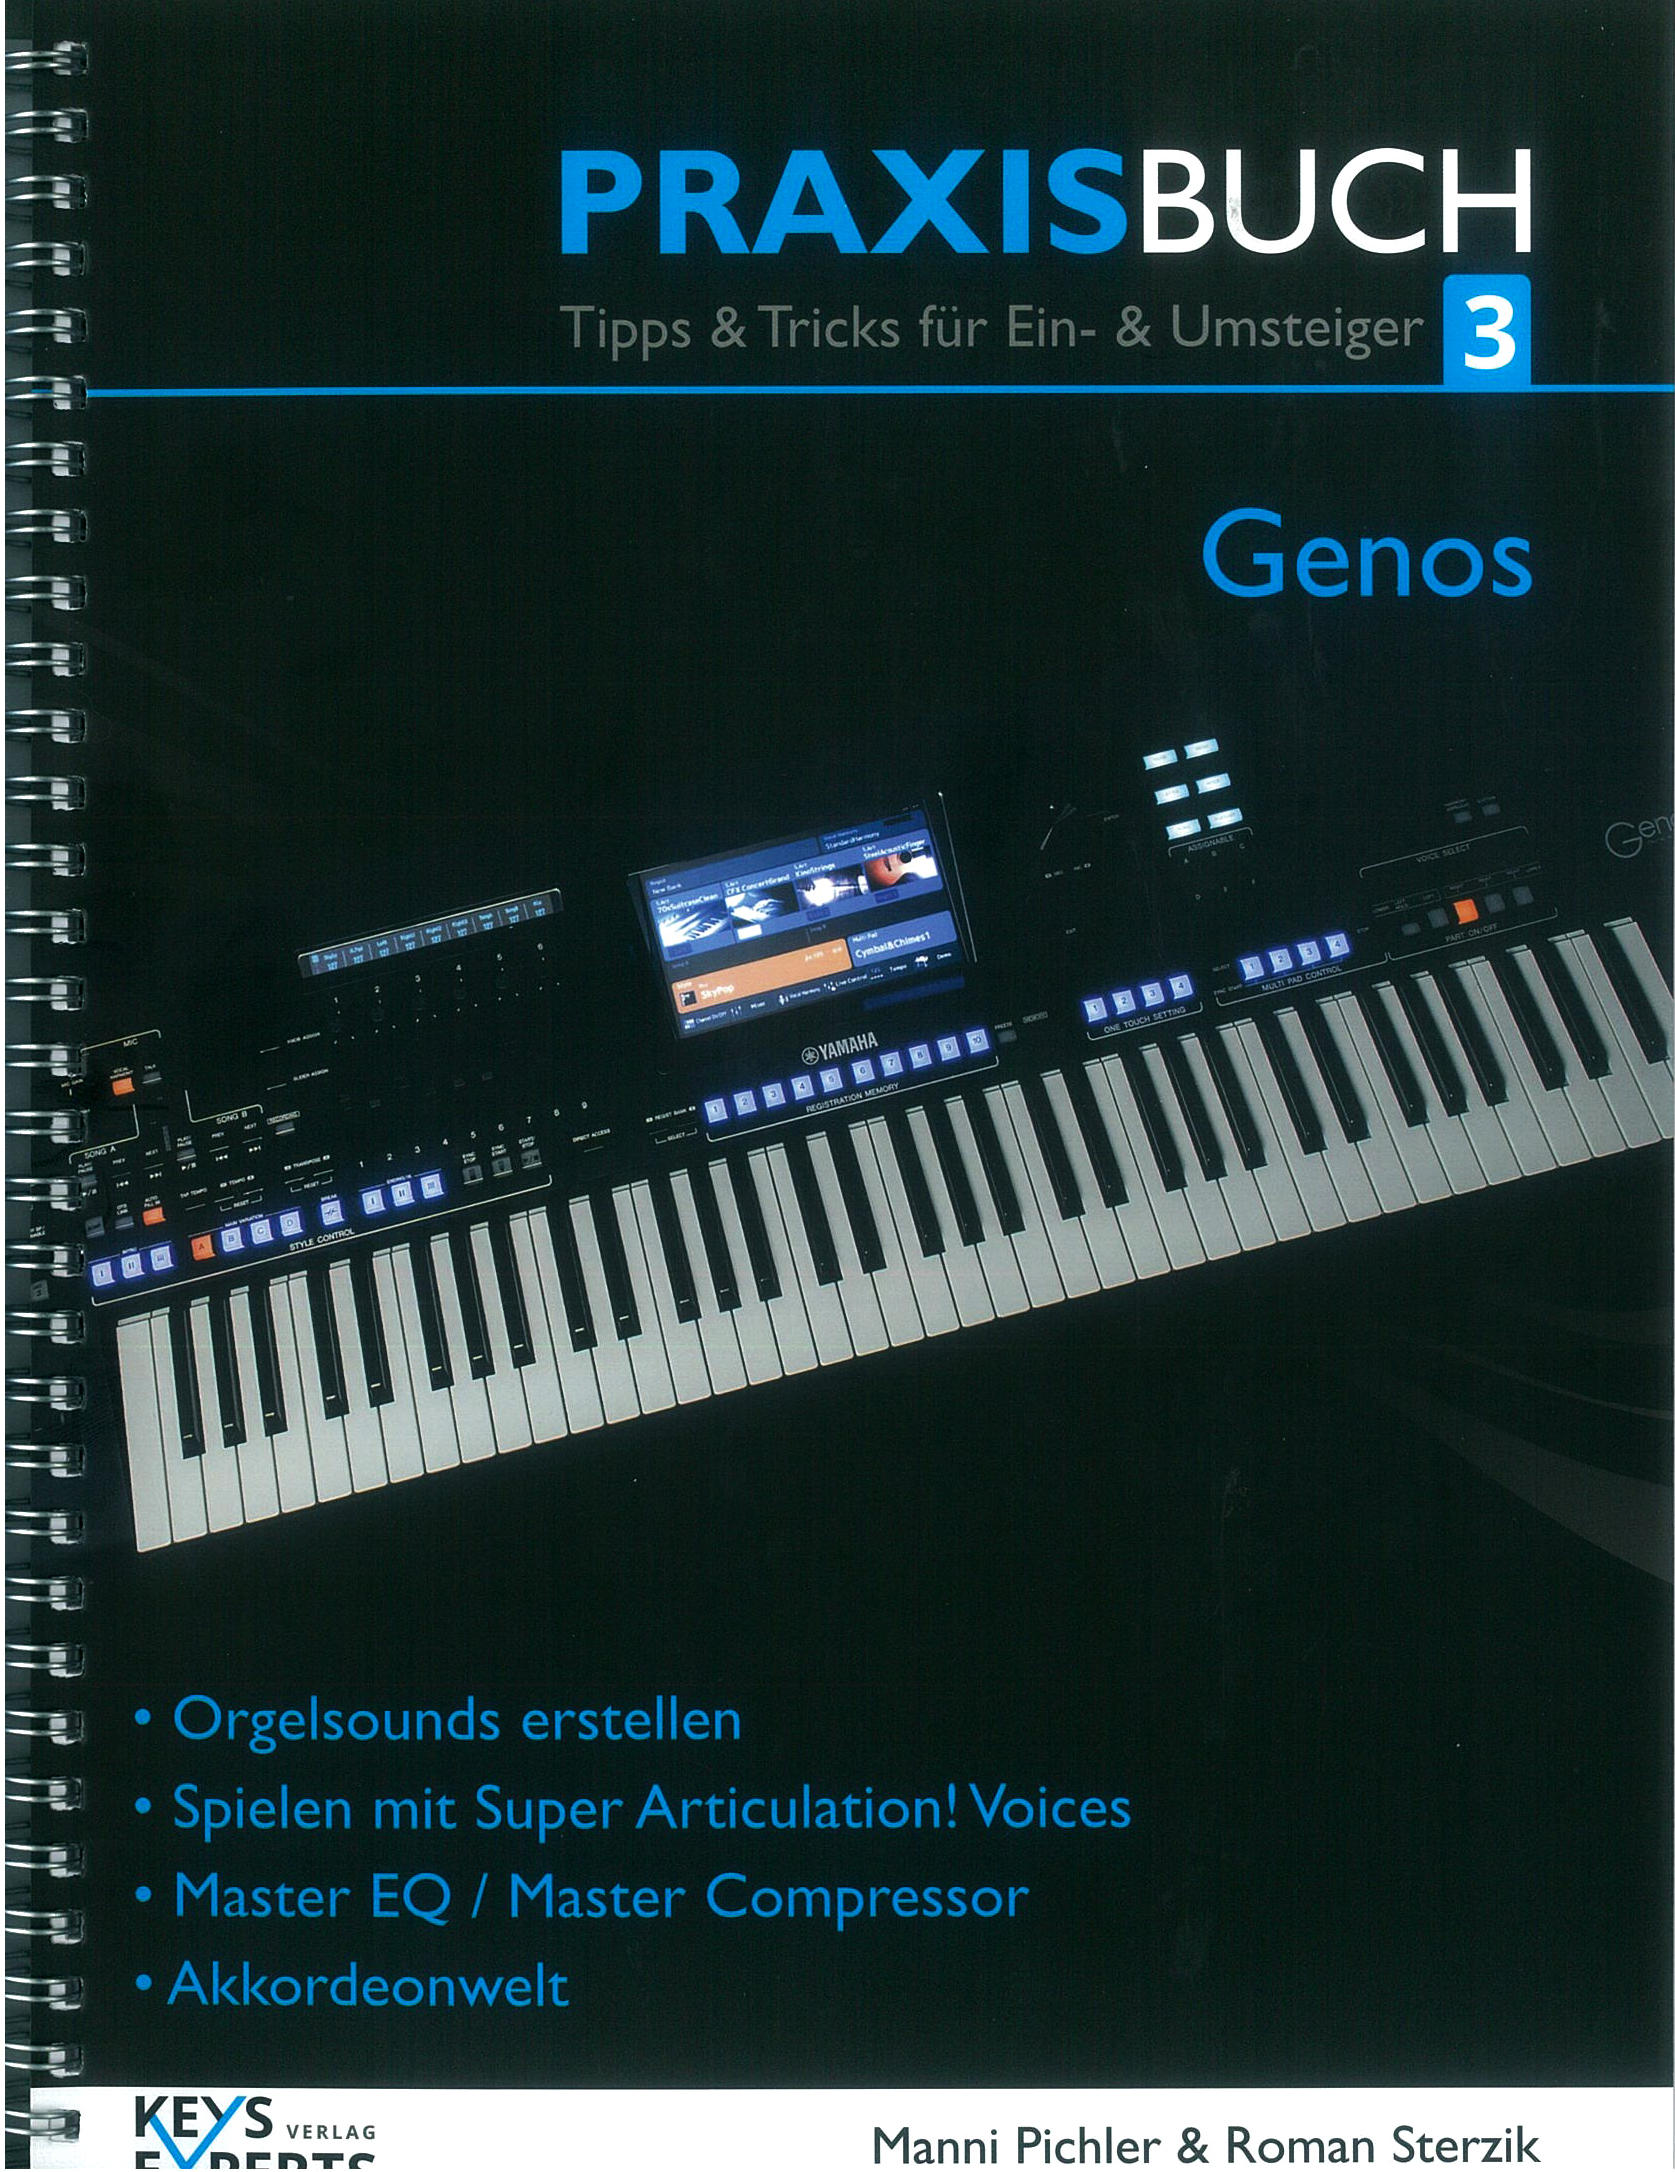 Yamaha Praxisbuch für Genos Teil 3